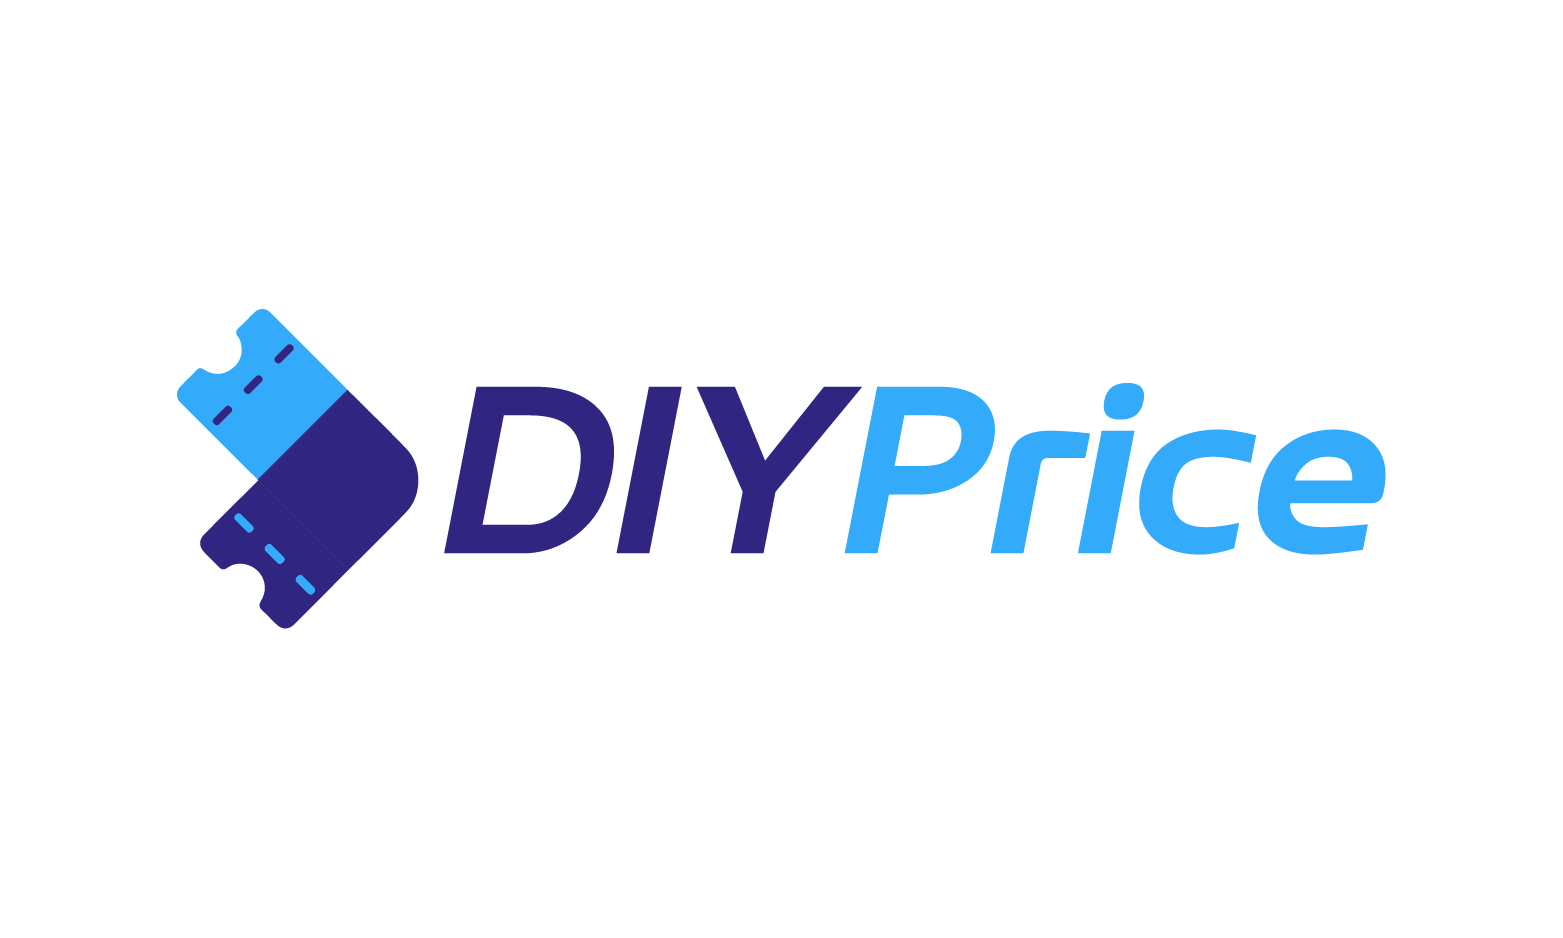 DIYPrice.com - Creative brandable domain for sale